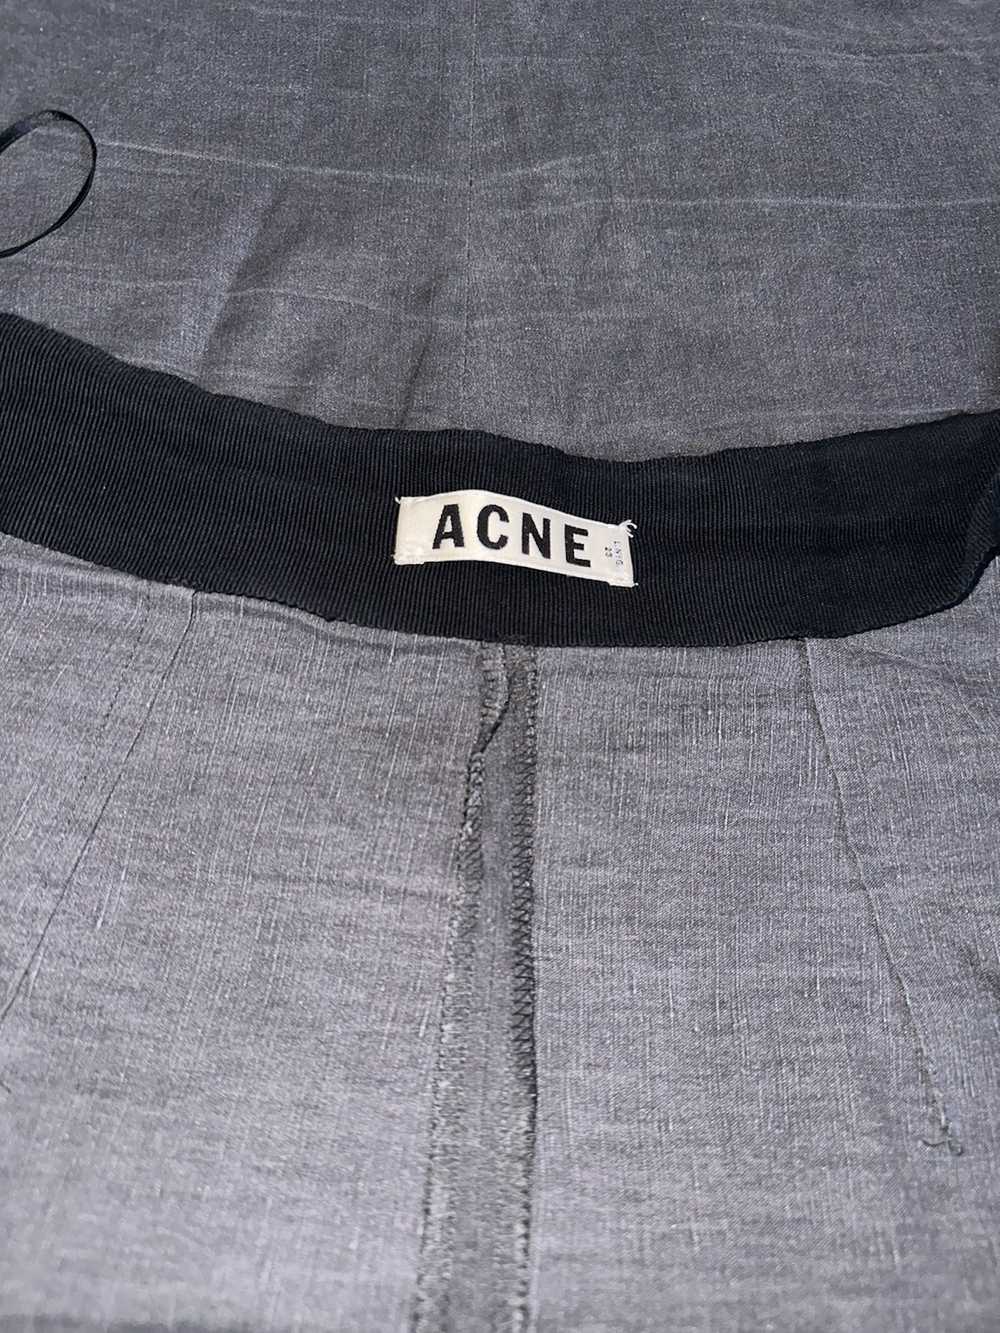 Acne Studios Acne Studios - Grey zip up mini skirt - image 6